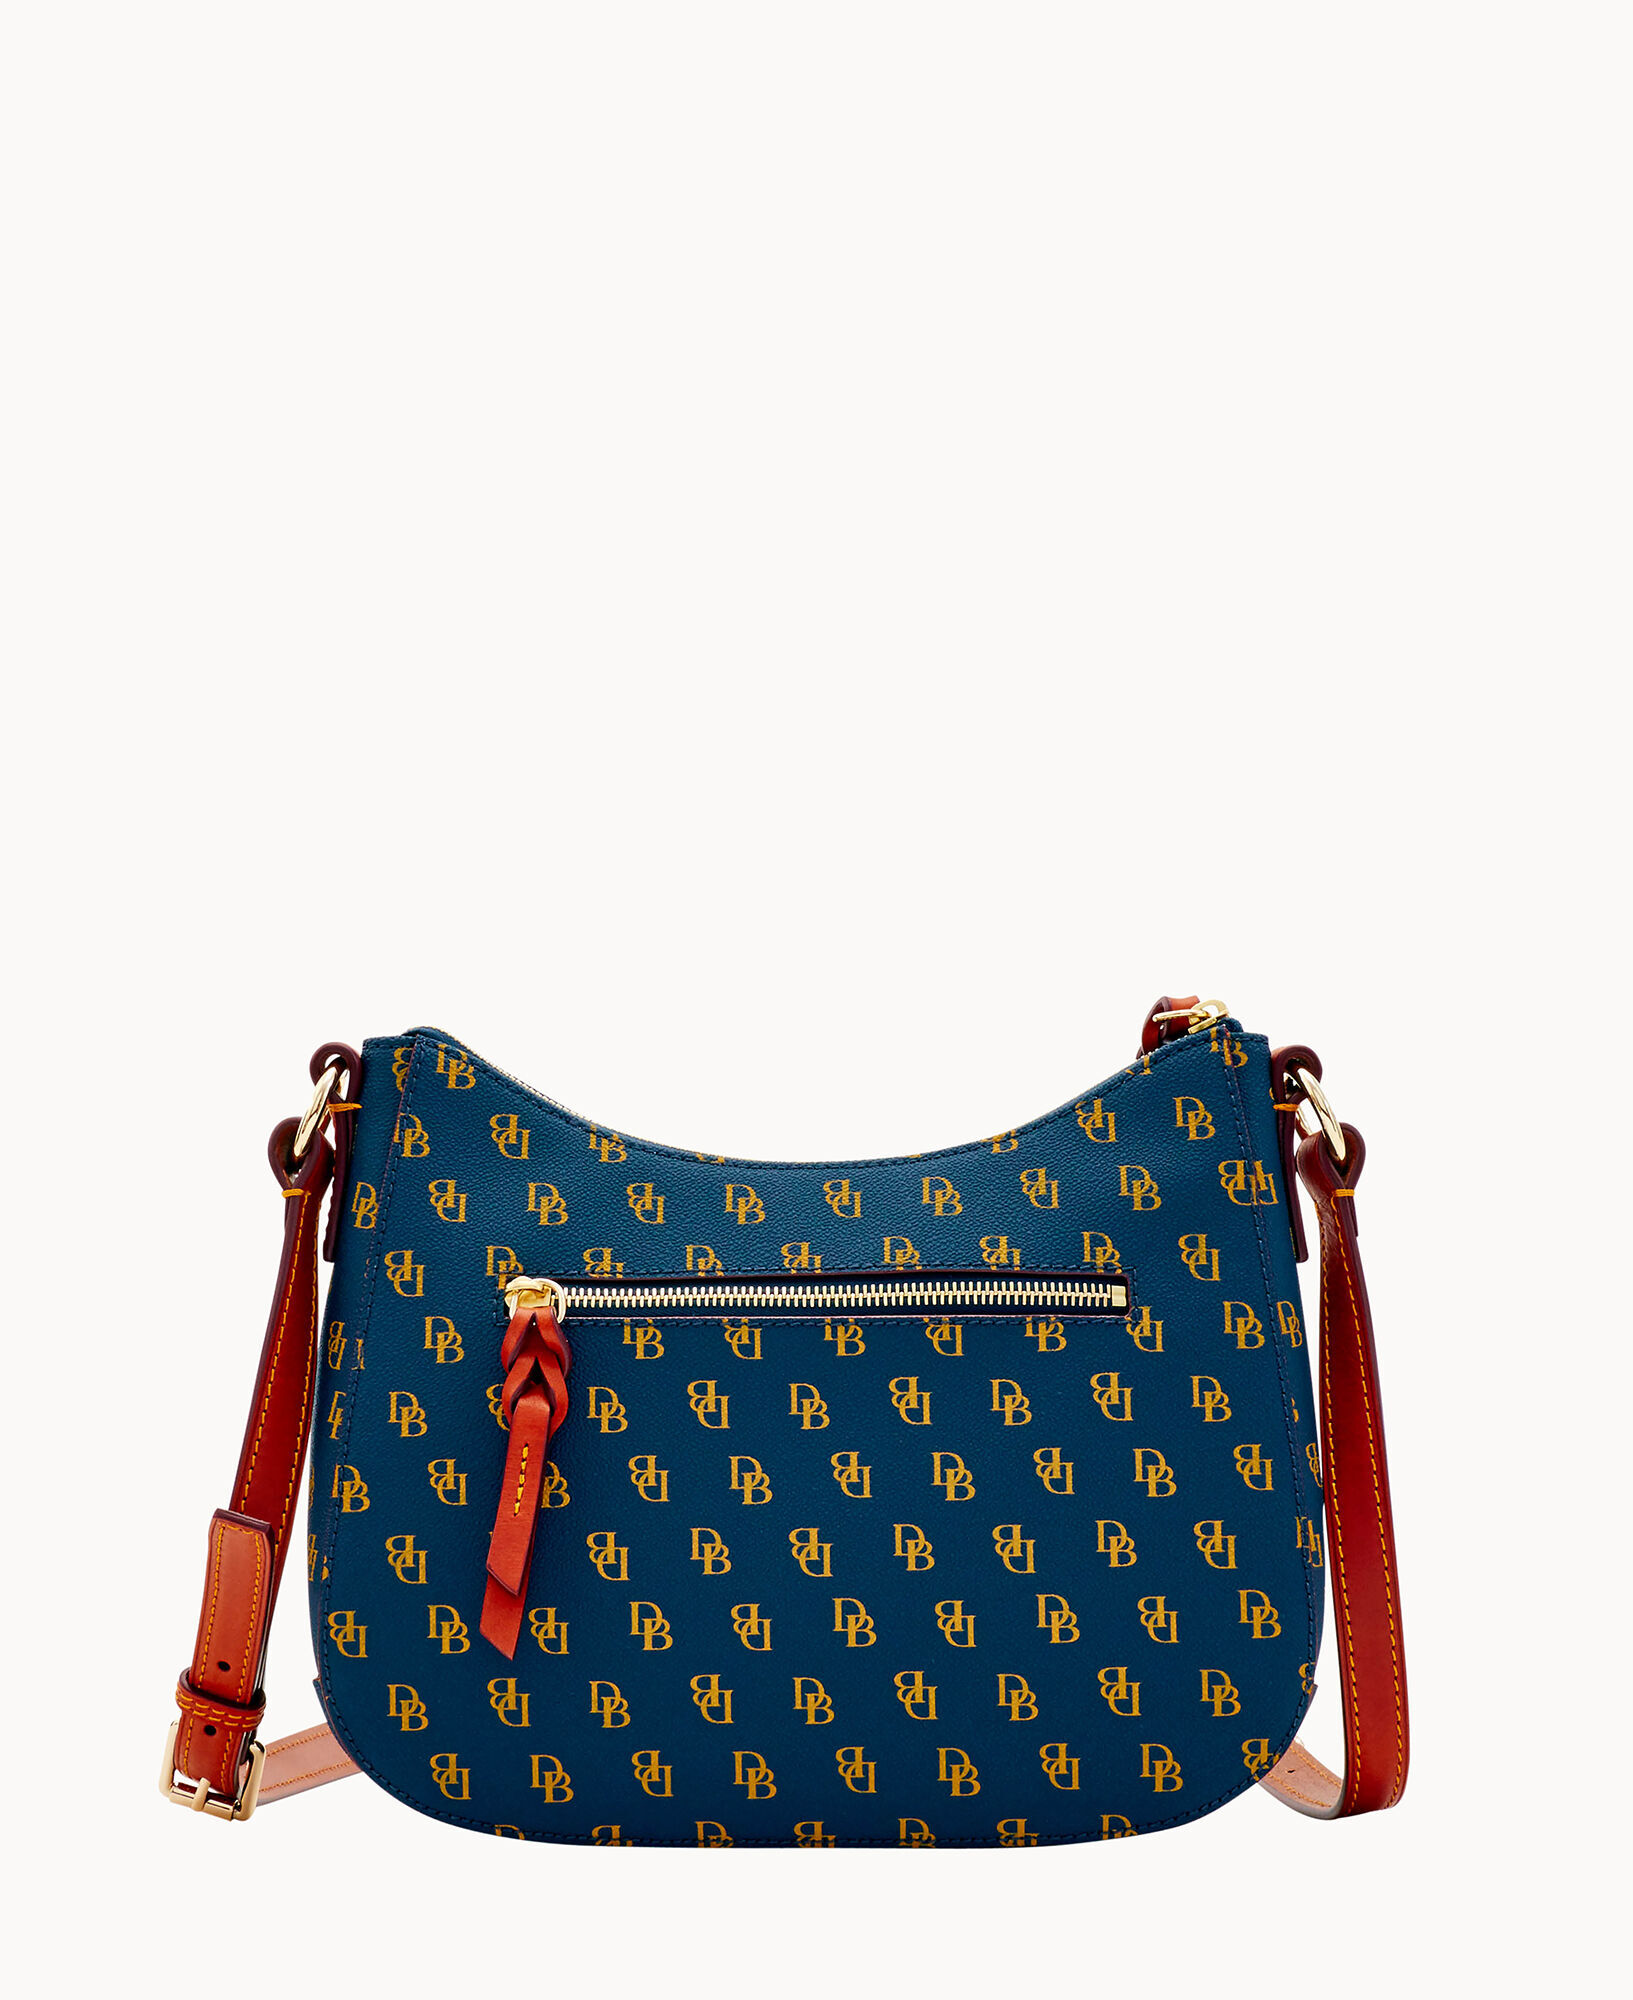 Dooney & Bourke Handbag, Gretta Small Zip Crossbody